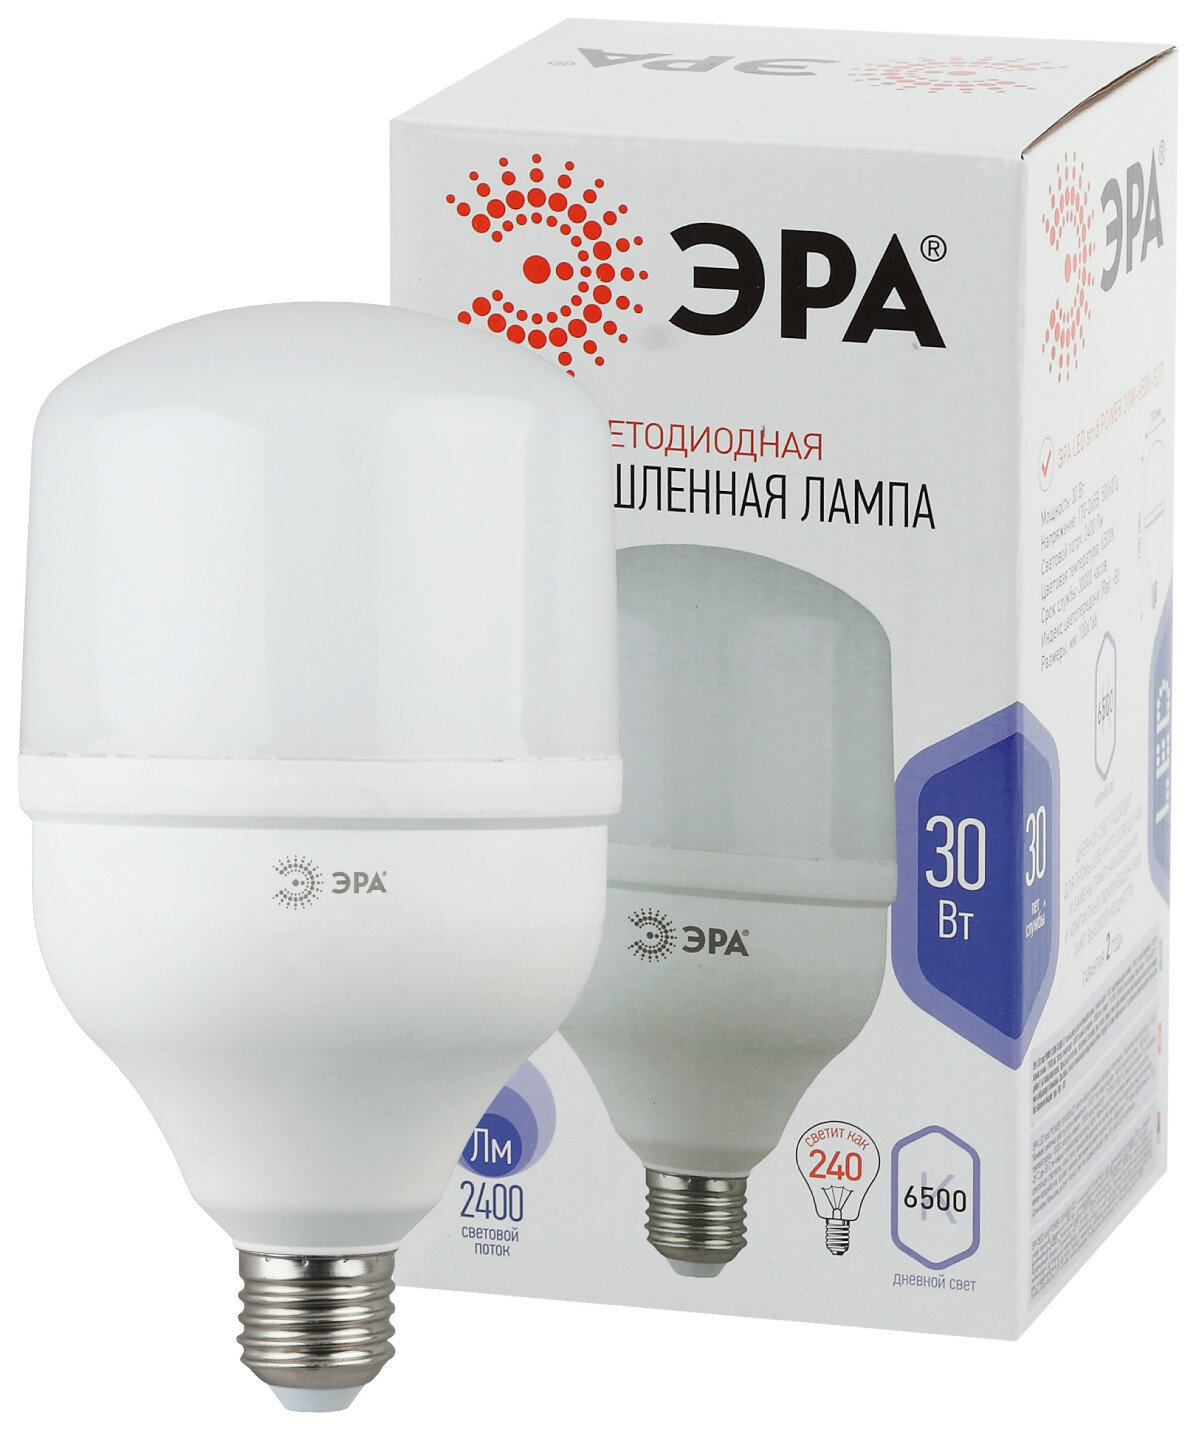 Лампа светодиодная LED колокол 30W Е27 2400Лм 6500К 220V POWER (Эра), арт. Б0027004